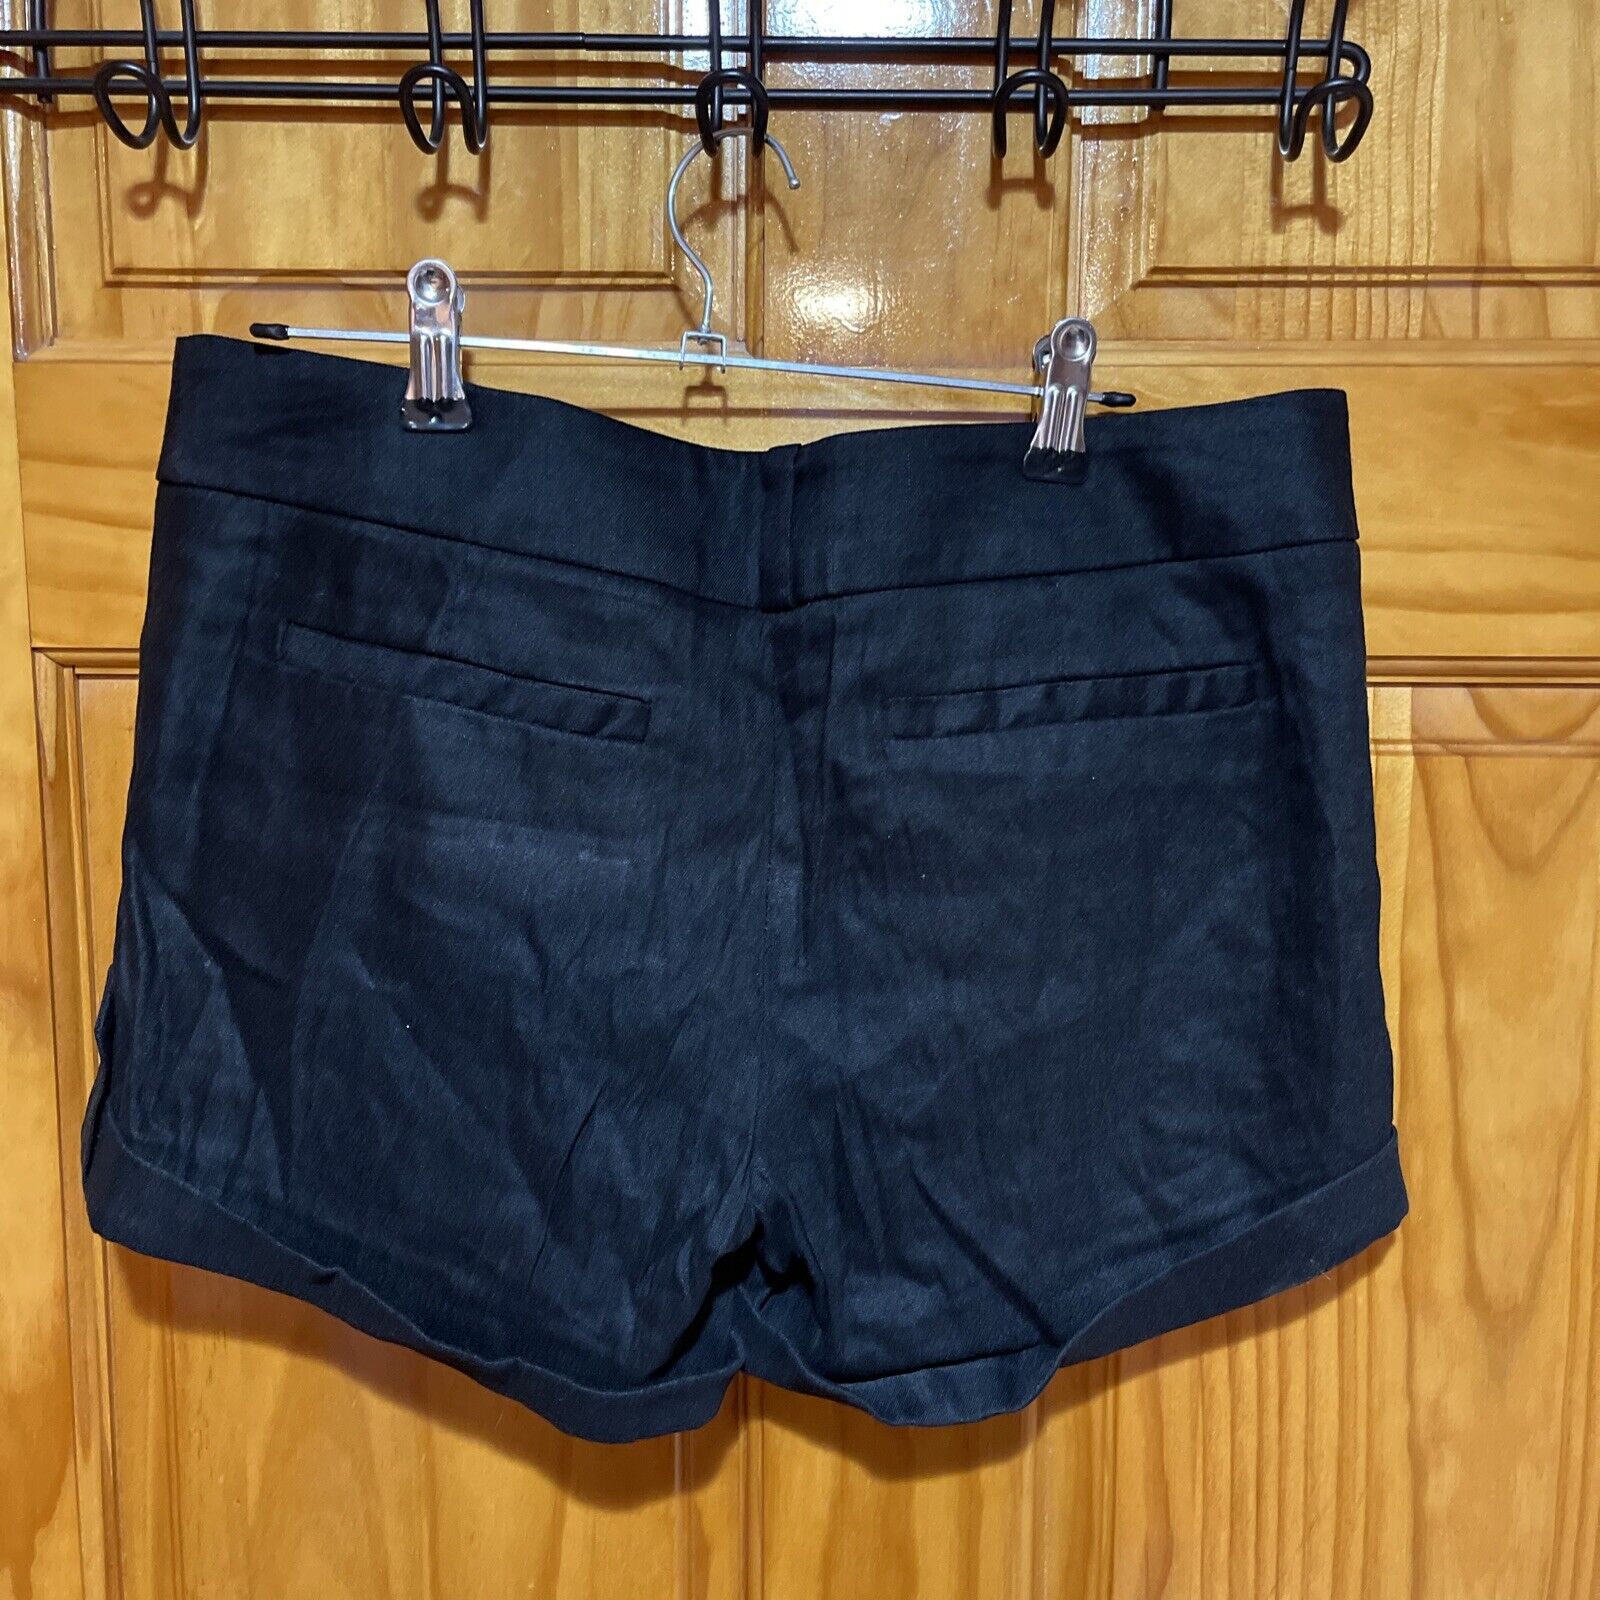 Bebe Black Linen Blend Shorts Women’s Size 4 - image 5